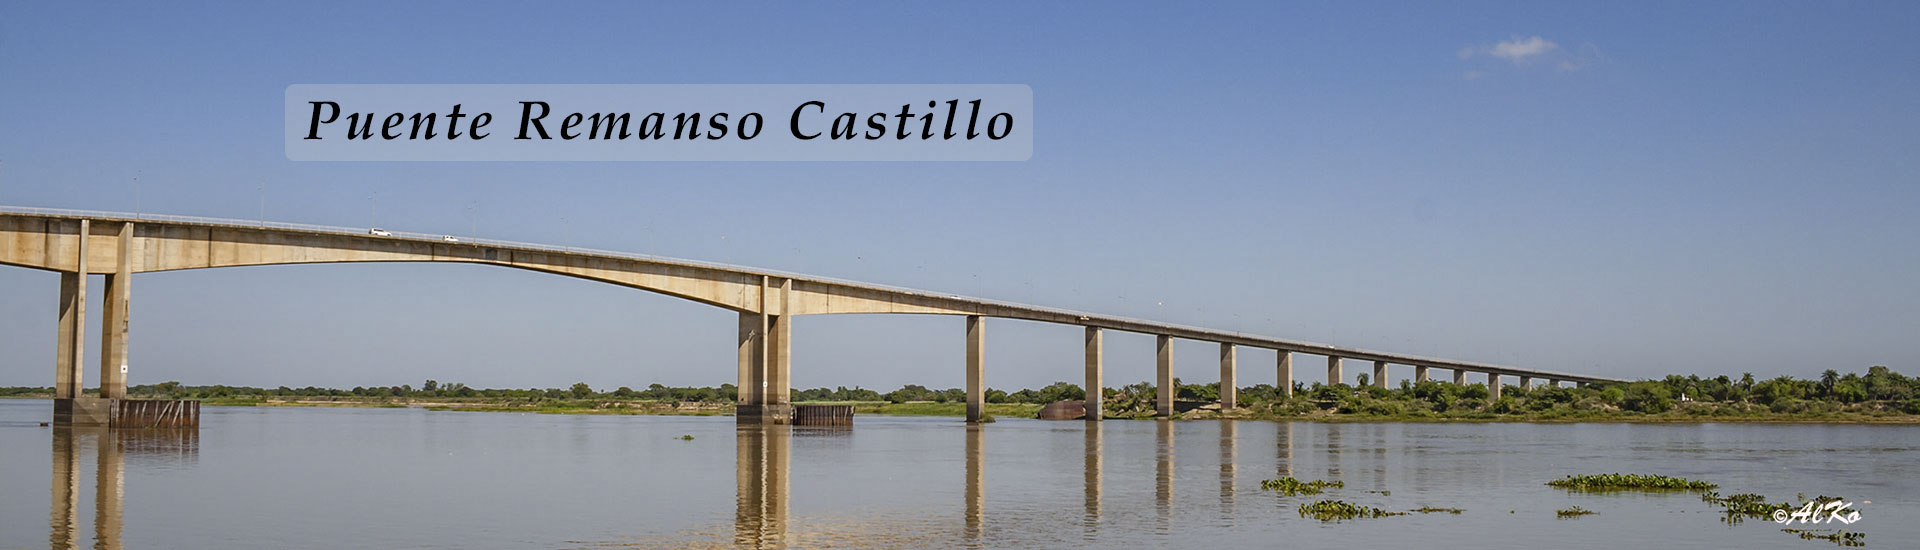 Puente-Remanso-Castillo.jpg